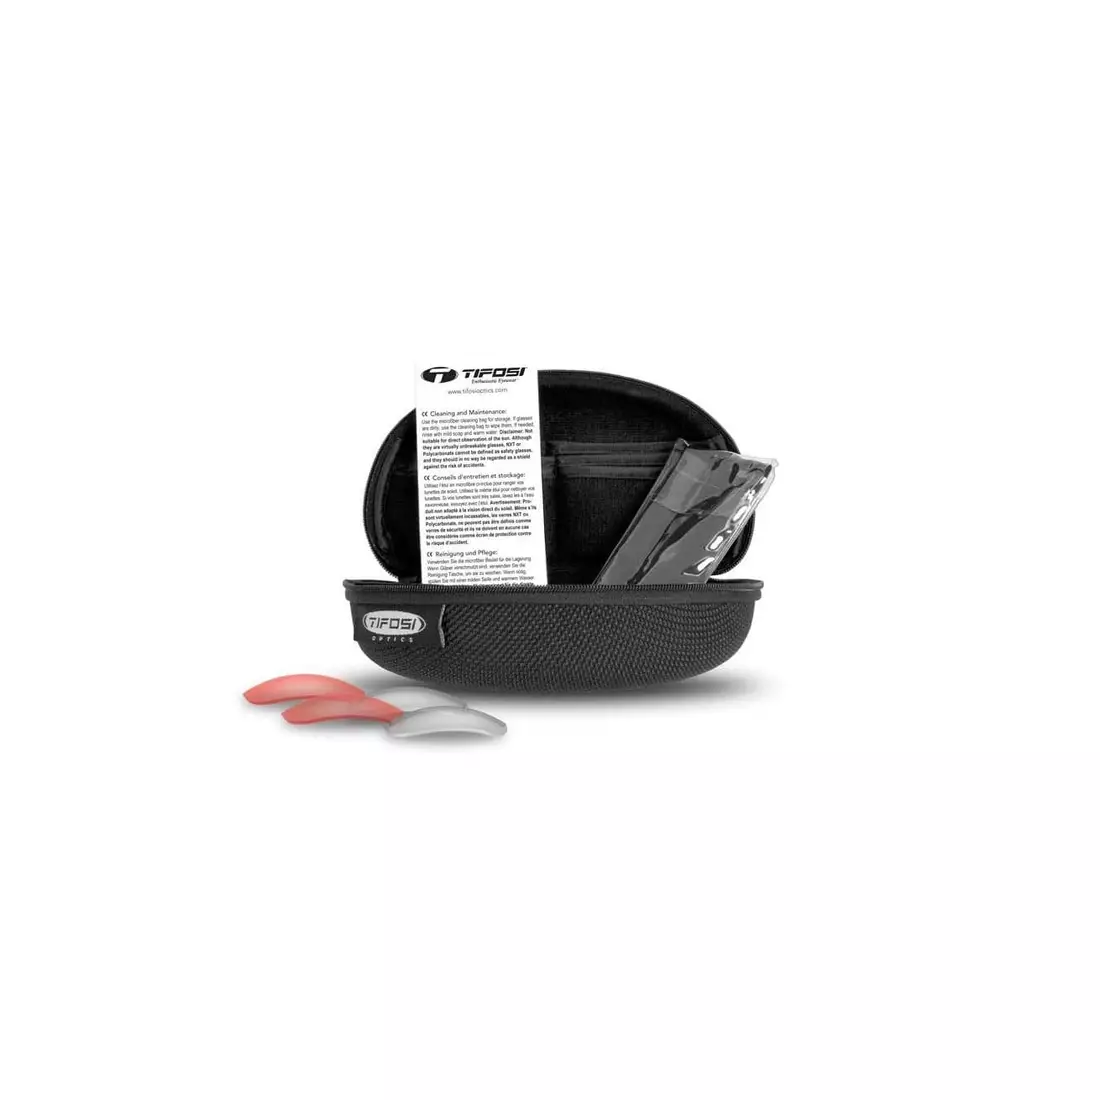 Ochelari sport cu lentile interschimbabile TIFOSI DAVOS matte black TFI-1460100101